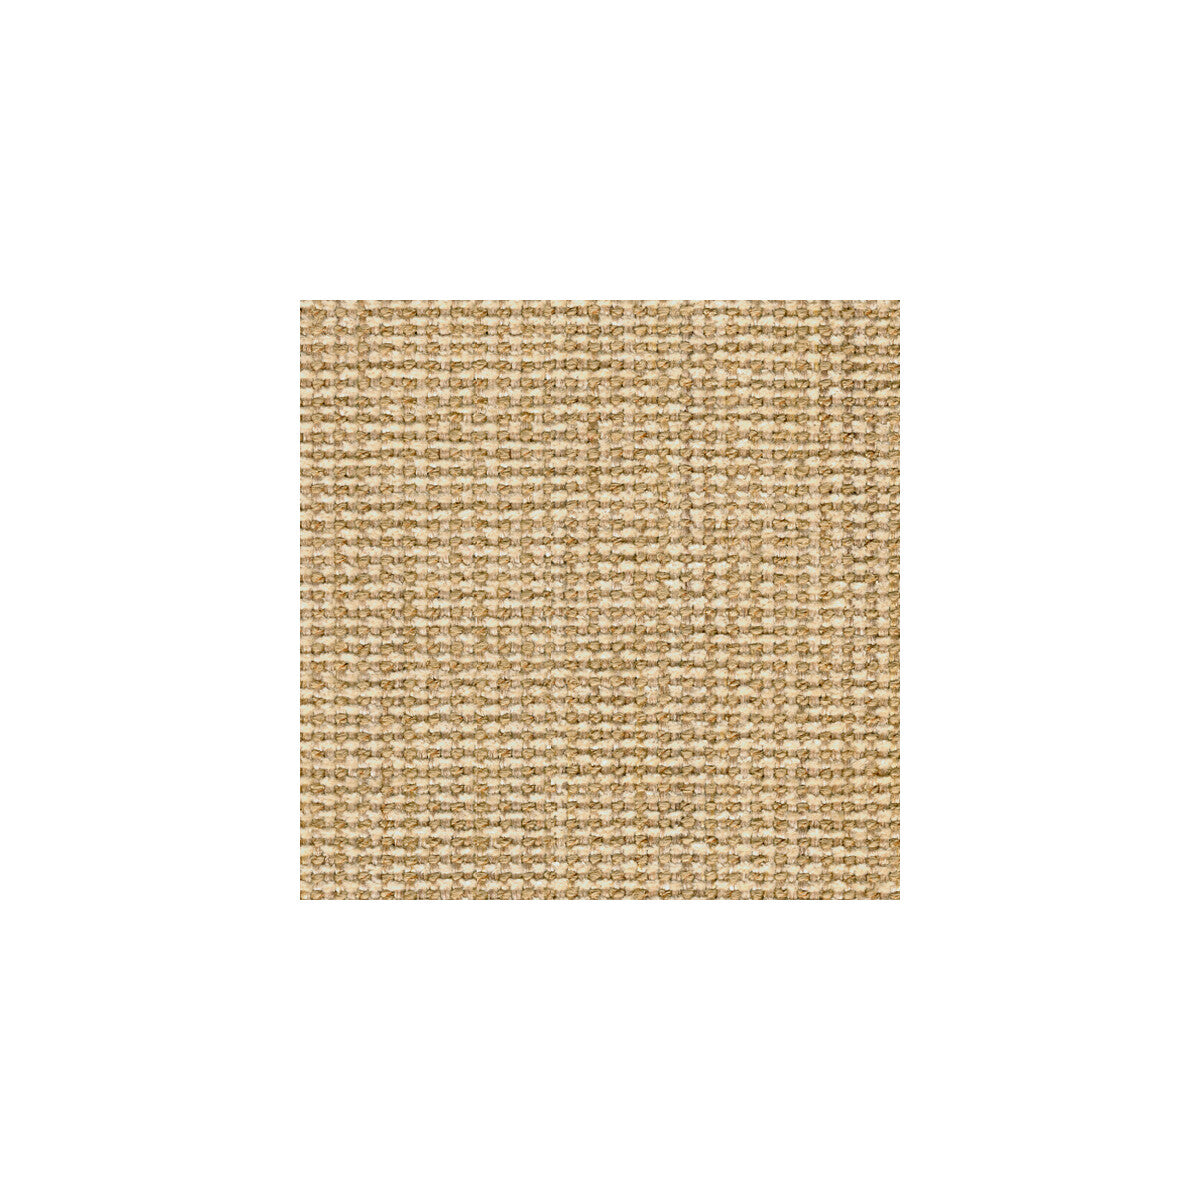 Kravet Smart fabric in 33034-16 color - pattern 33034.16.0 - by Kravet Smart